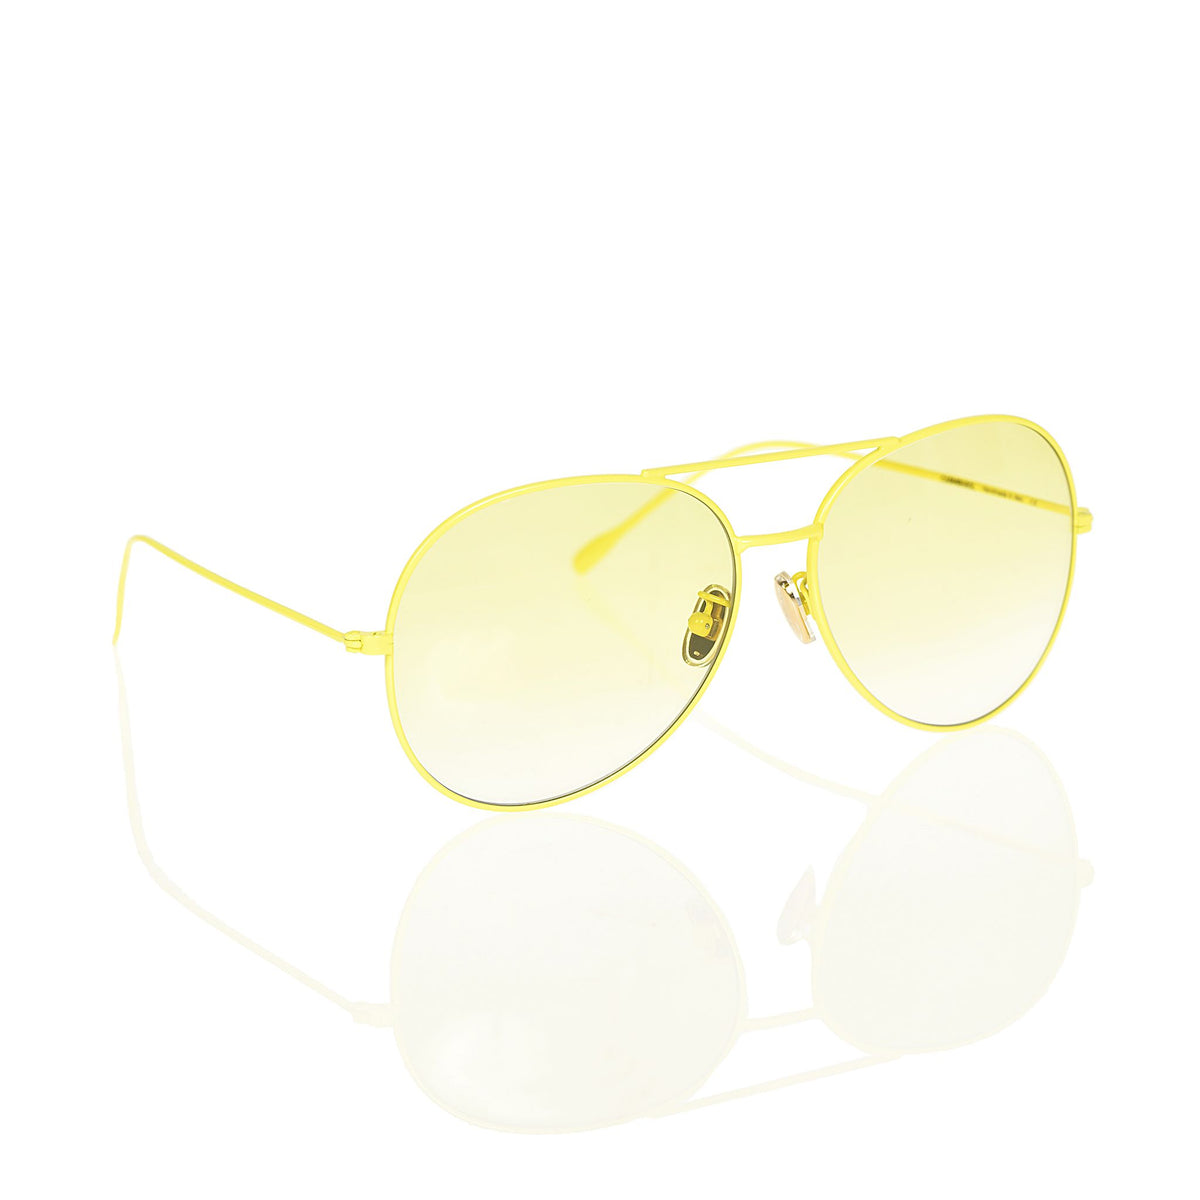 Yellow sunglasses style aviator in 2 sizes medium and large